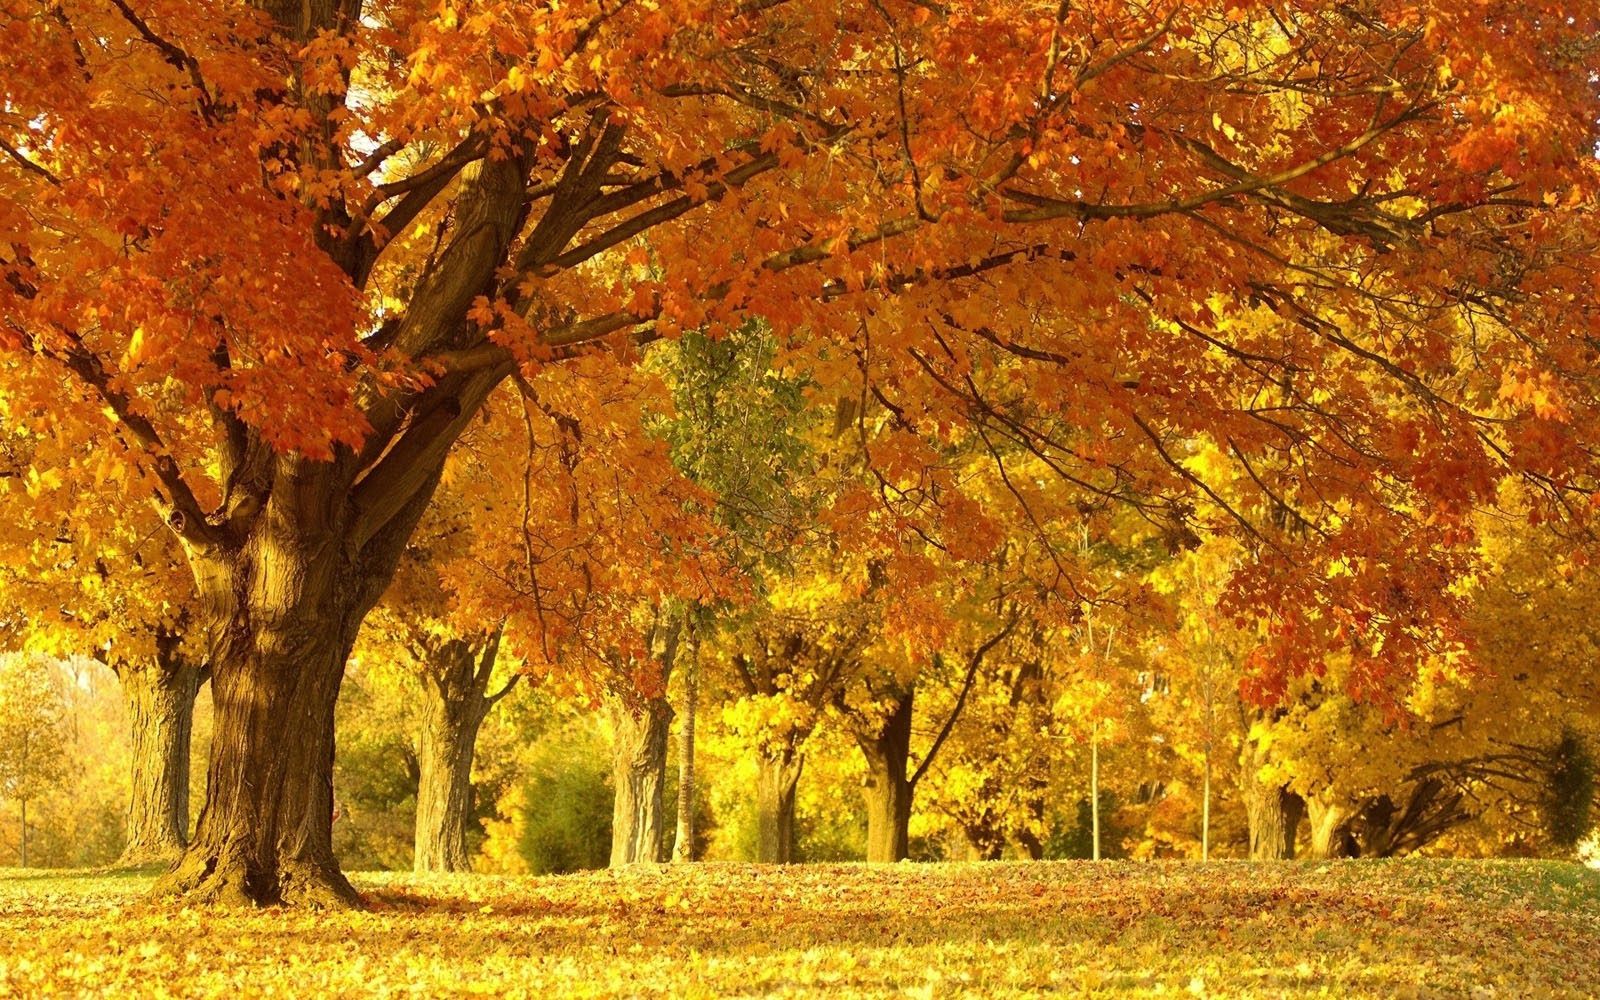 Clovisso Wallpaper Gallery: Autumn Scenery Desktop Wallpaper